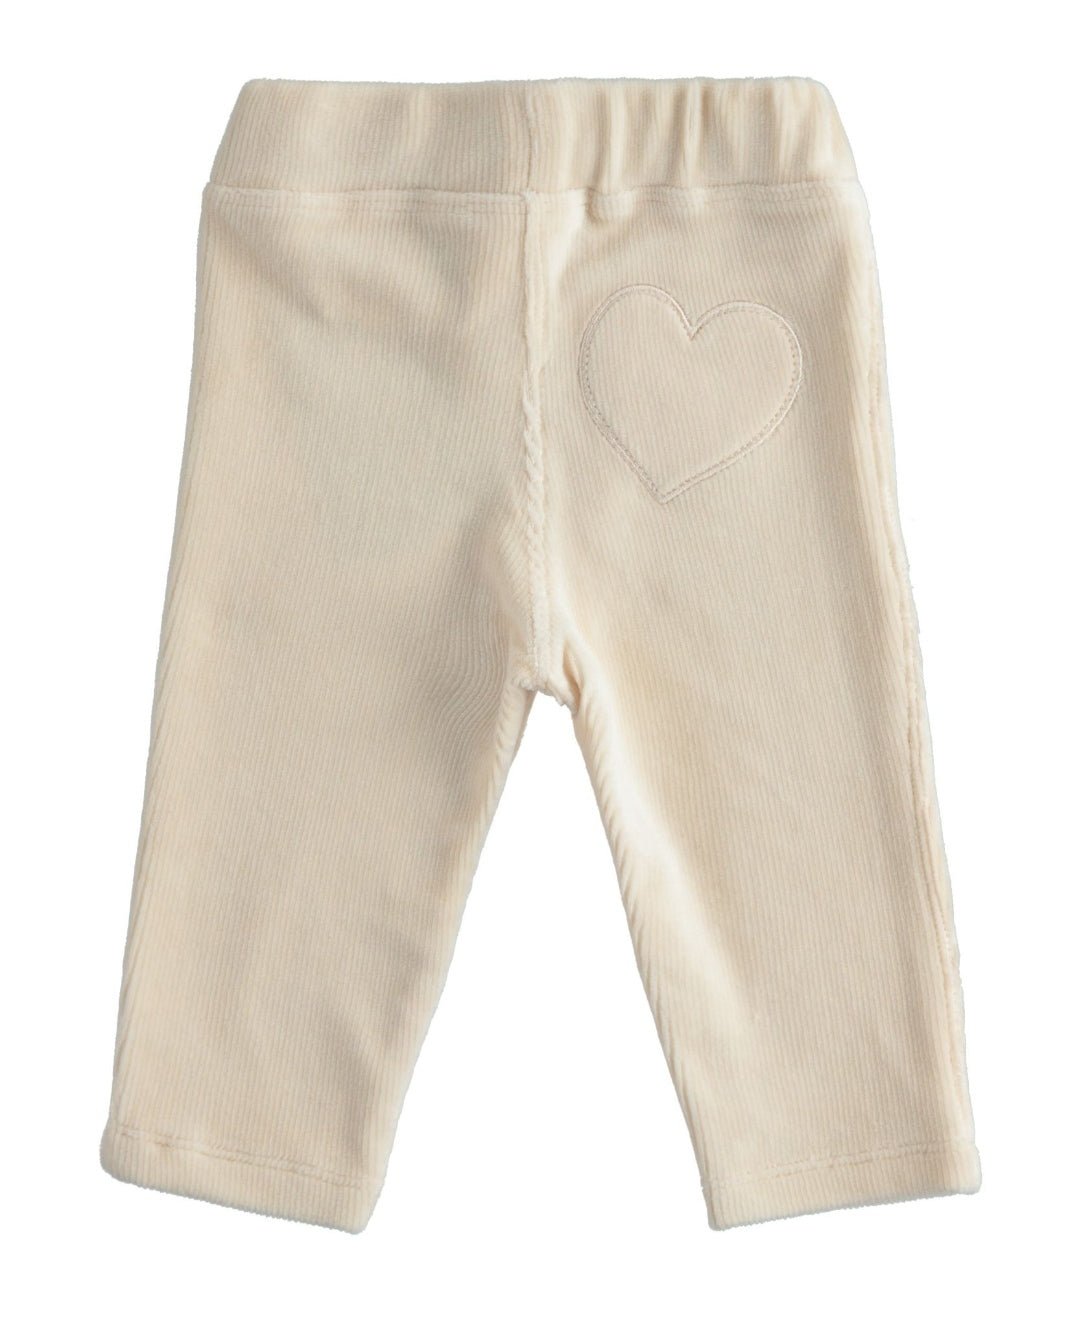 Pantalone ciniglia costine bimba - Coccole e Ricami |email: info@coccoleericami.shop| P.Iva 09642670583